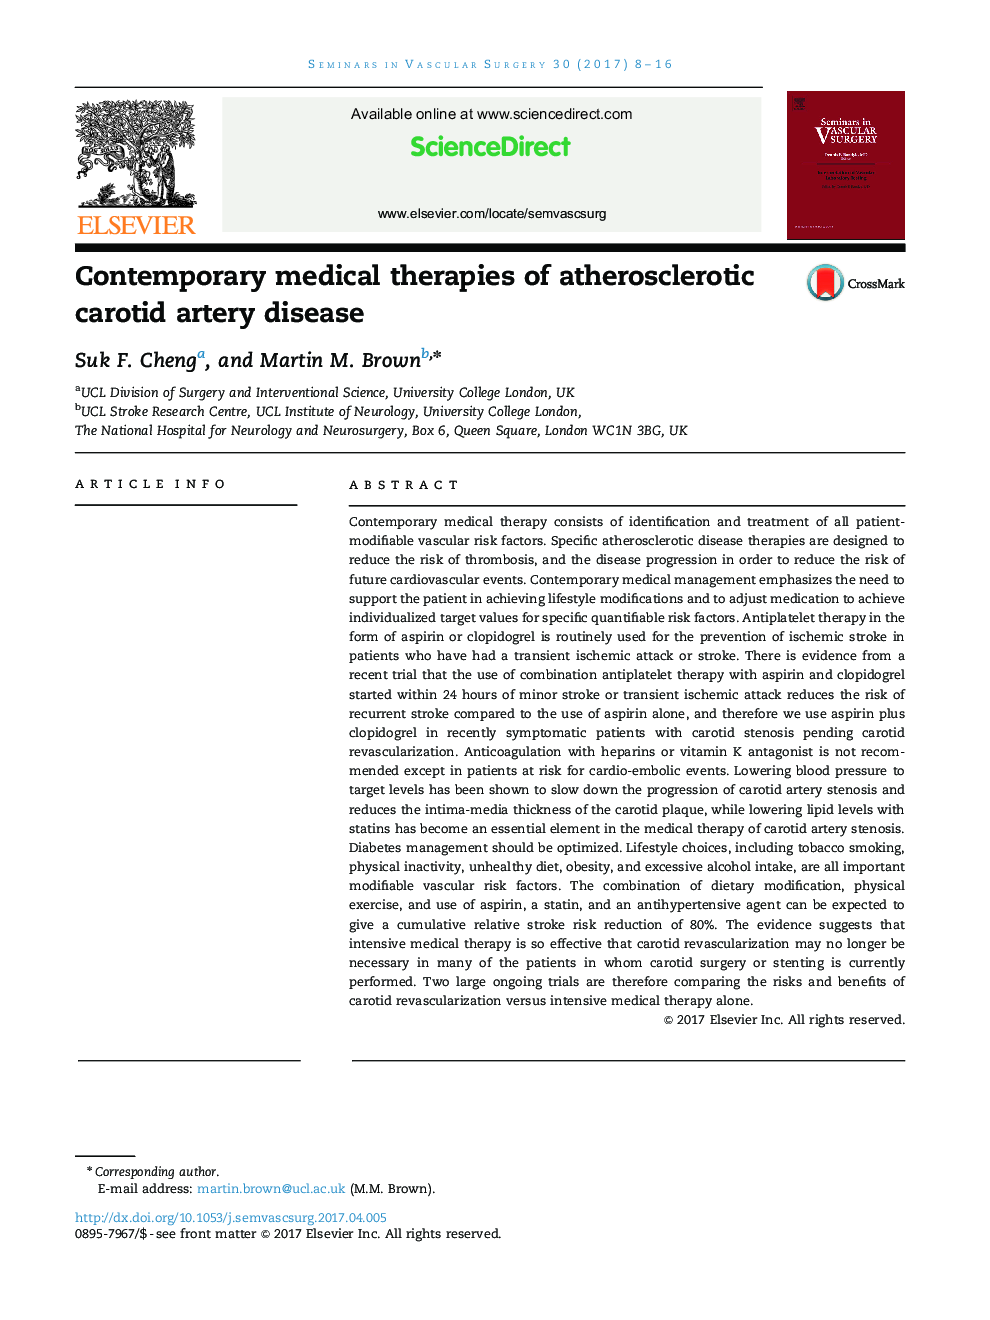 Contemporary medical therapies of atherosclerotic carotid artery disease